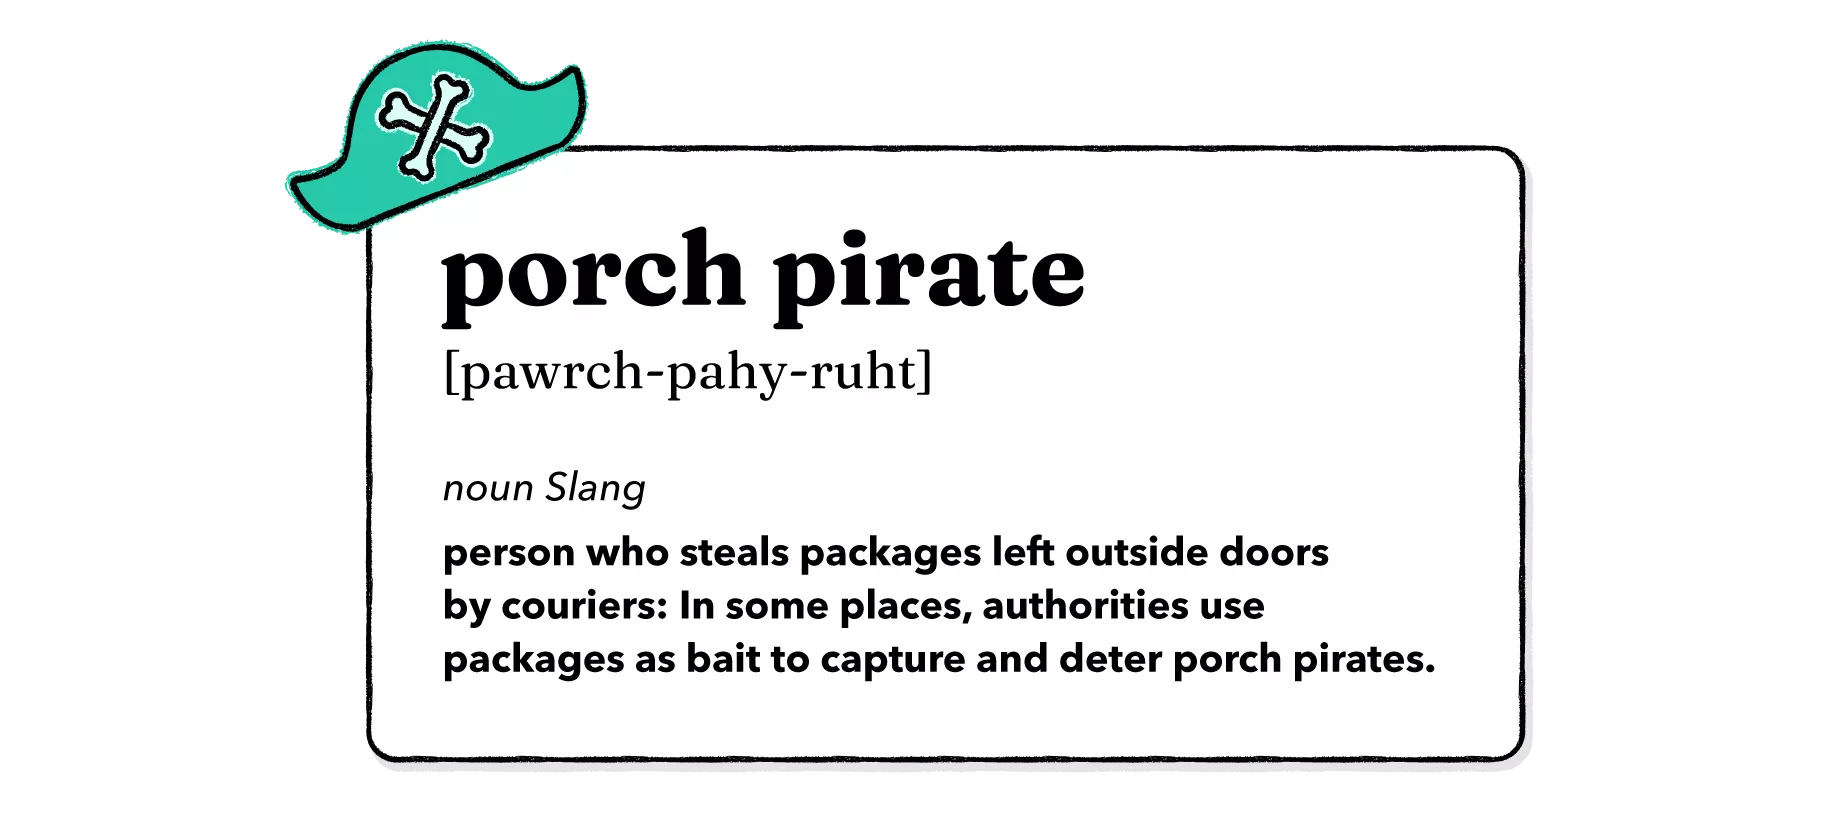 porch pirate definition